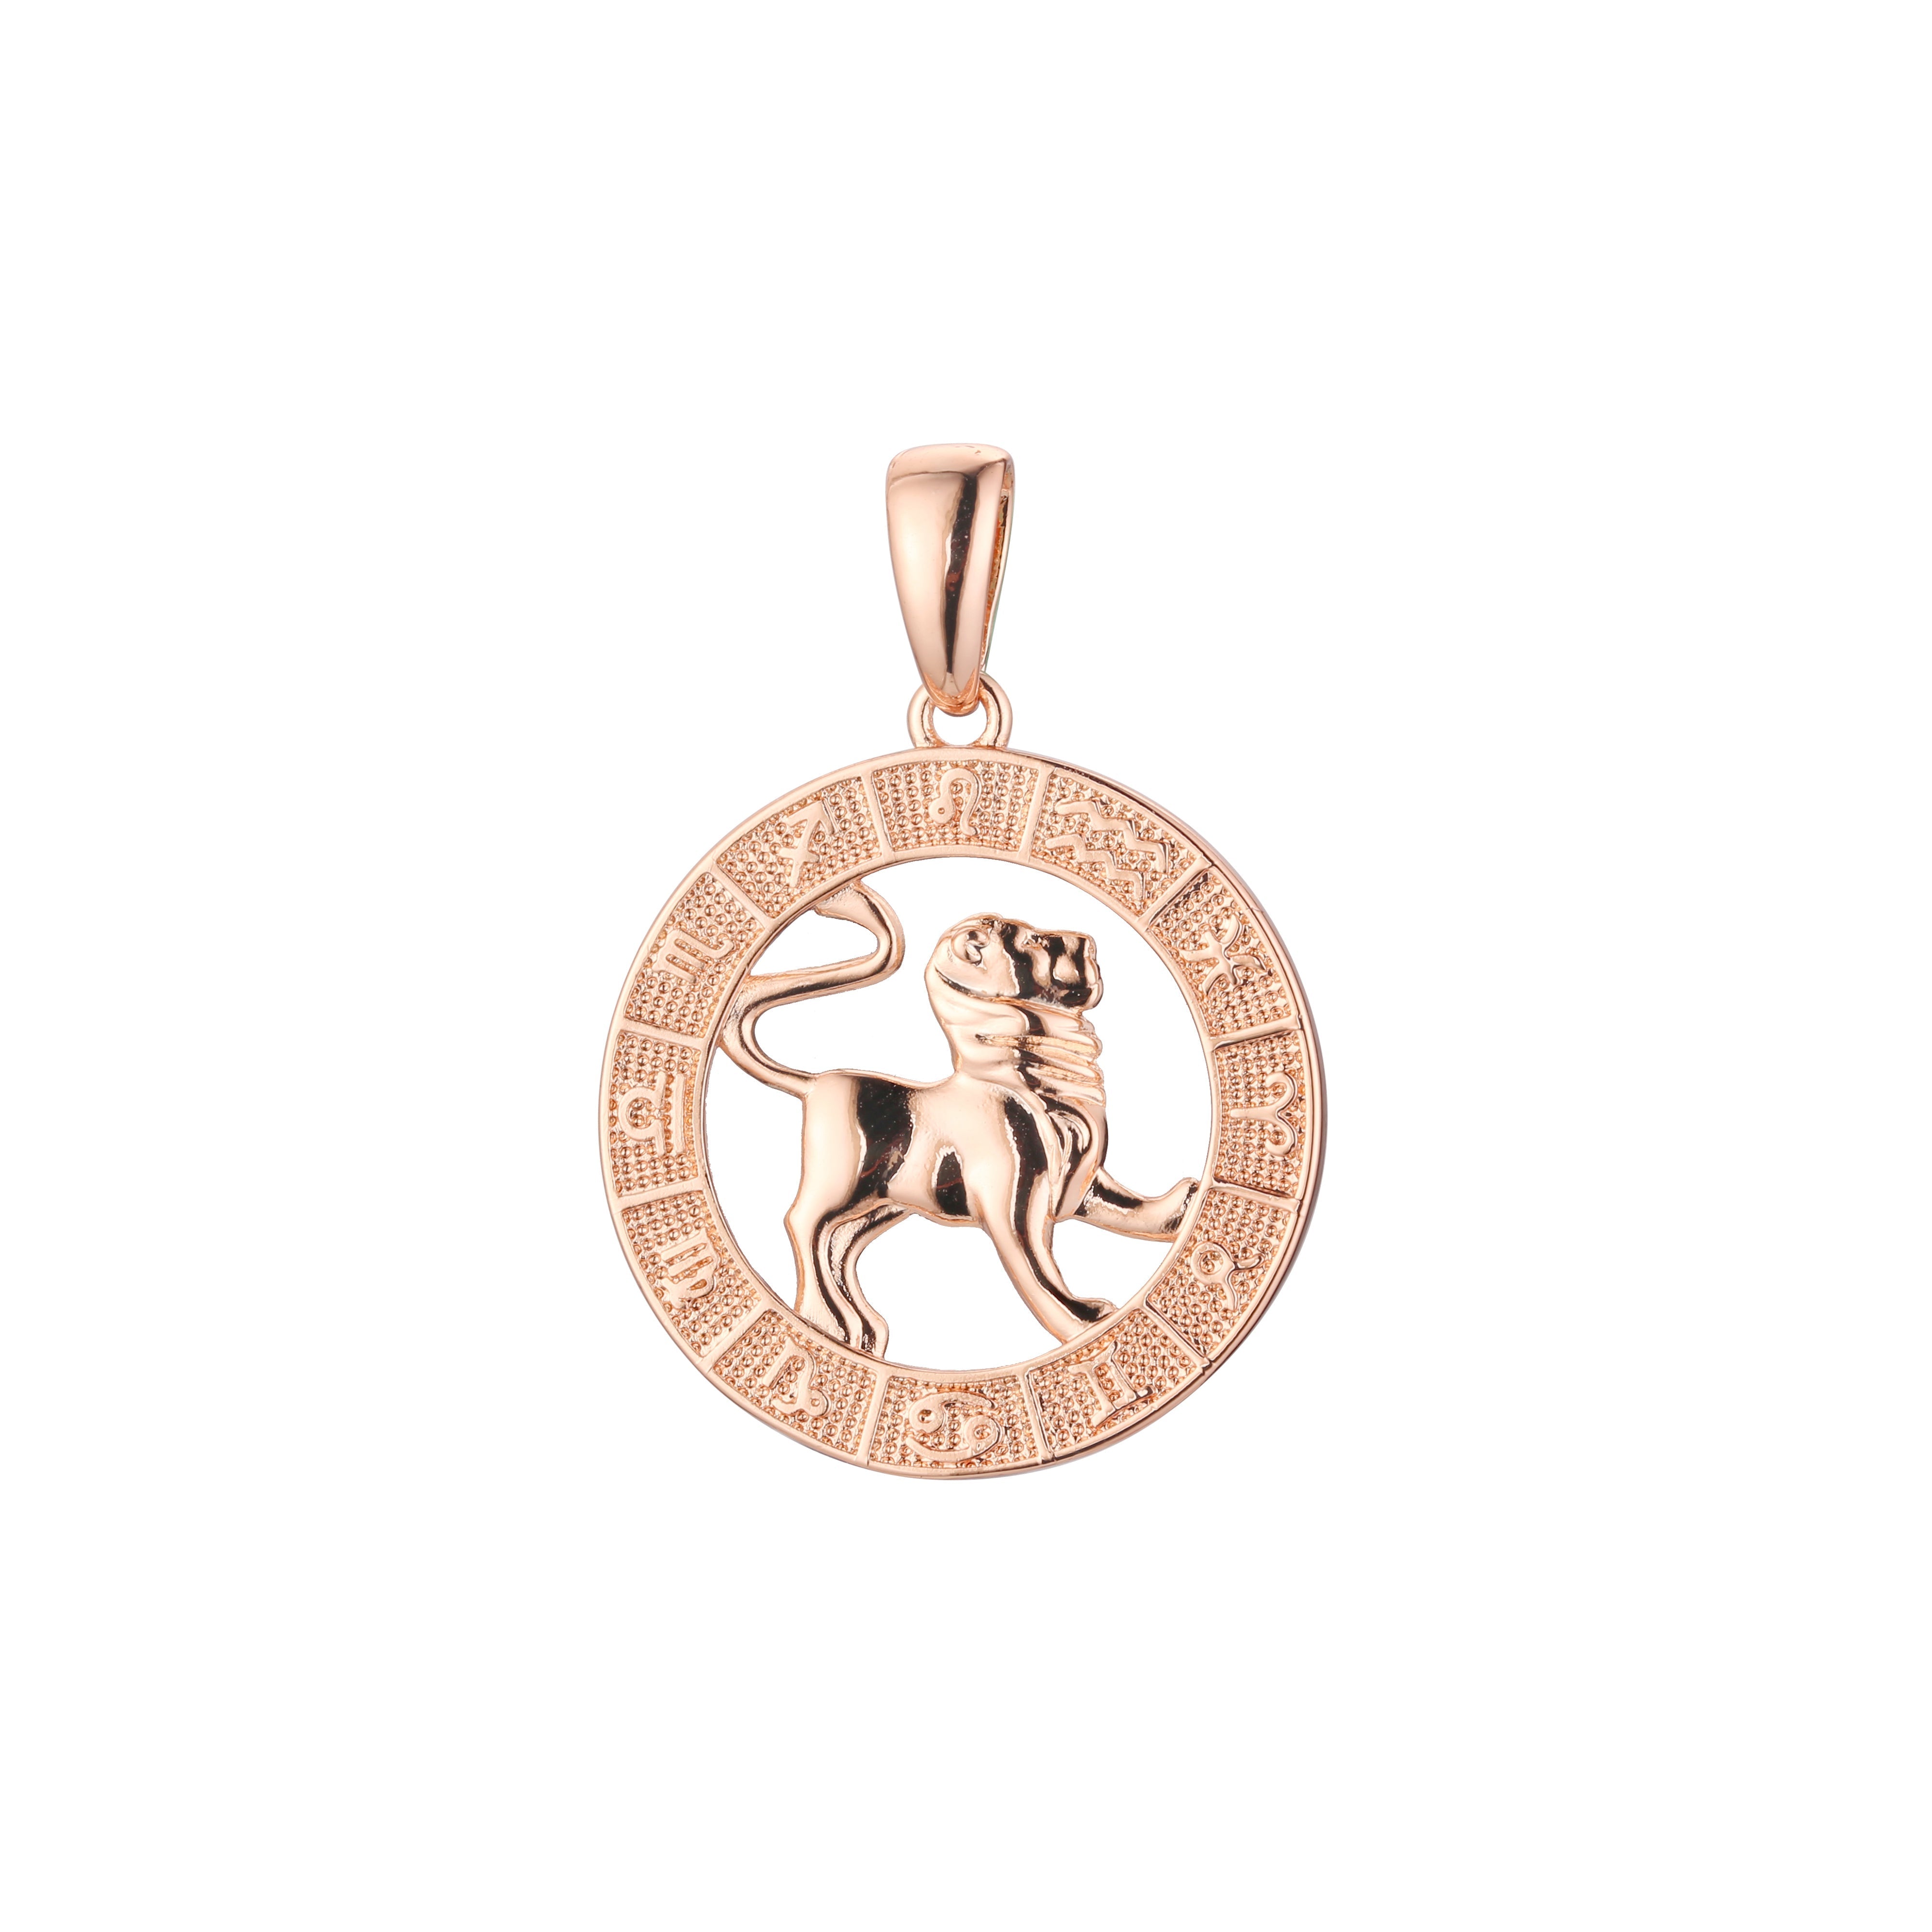 .Constellation Fallon Zodiac constellation Rose Gold two tone pendant - Luxurious Zodiac circle